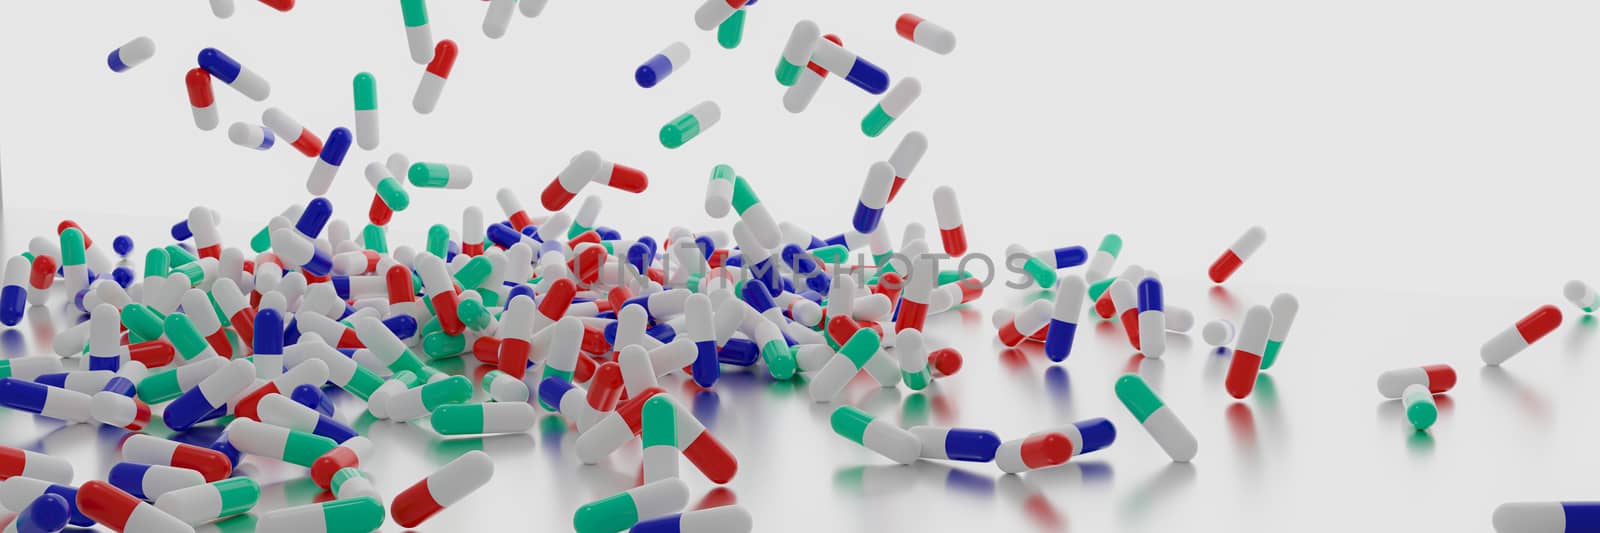 pharmaceutical colorful pills medicine  antibiotics tablets. by ridersuperone